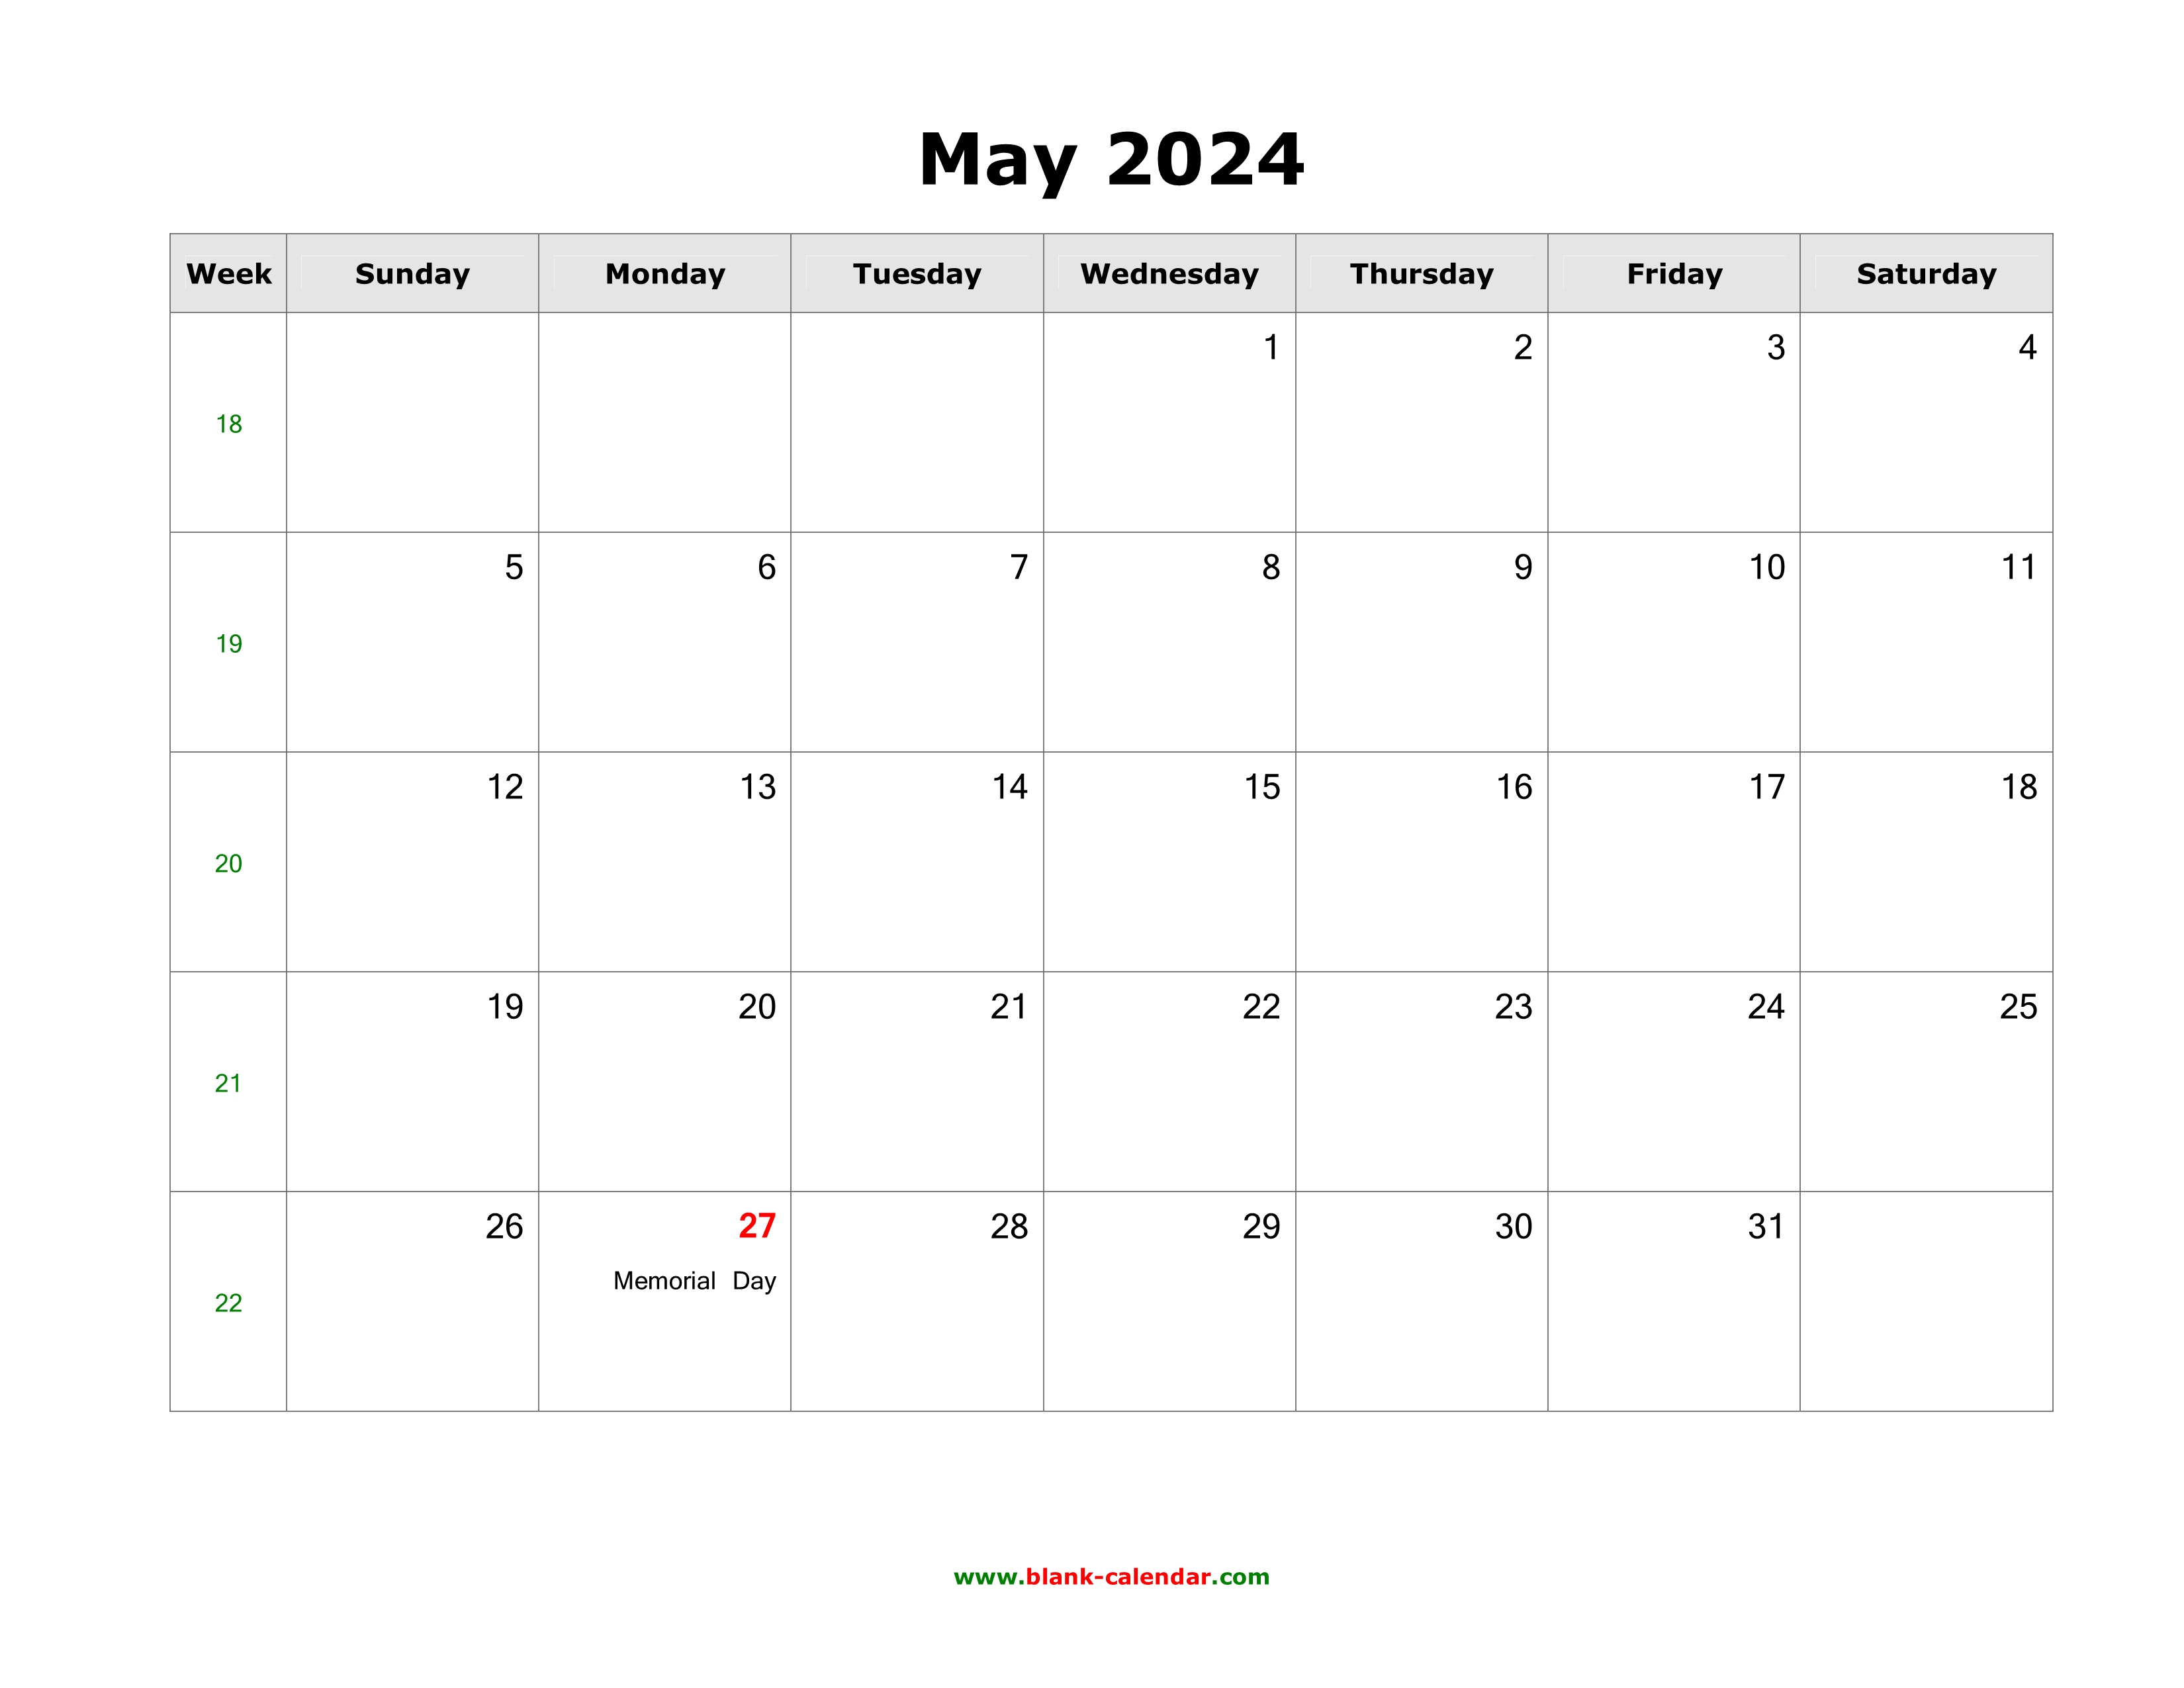 download-may-2024-blank-calendar-with-us-holidays-horizontal